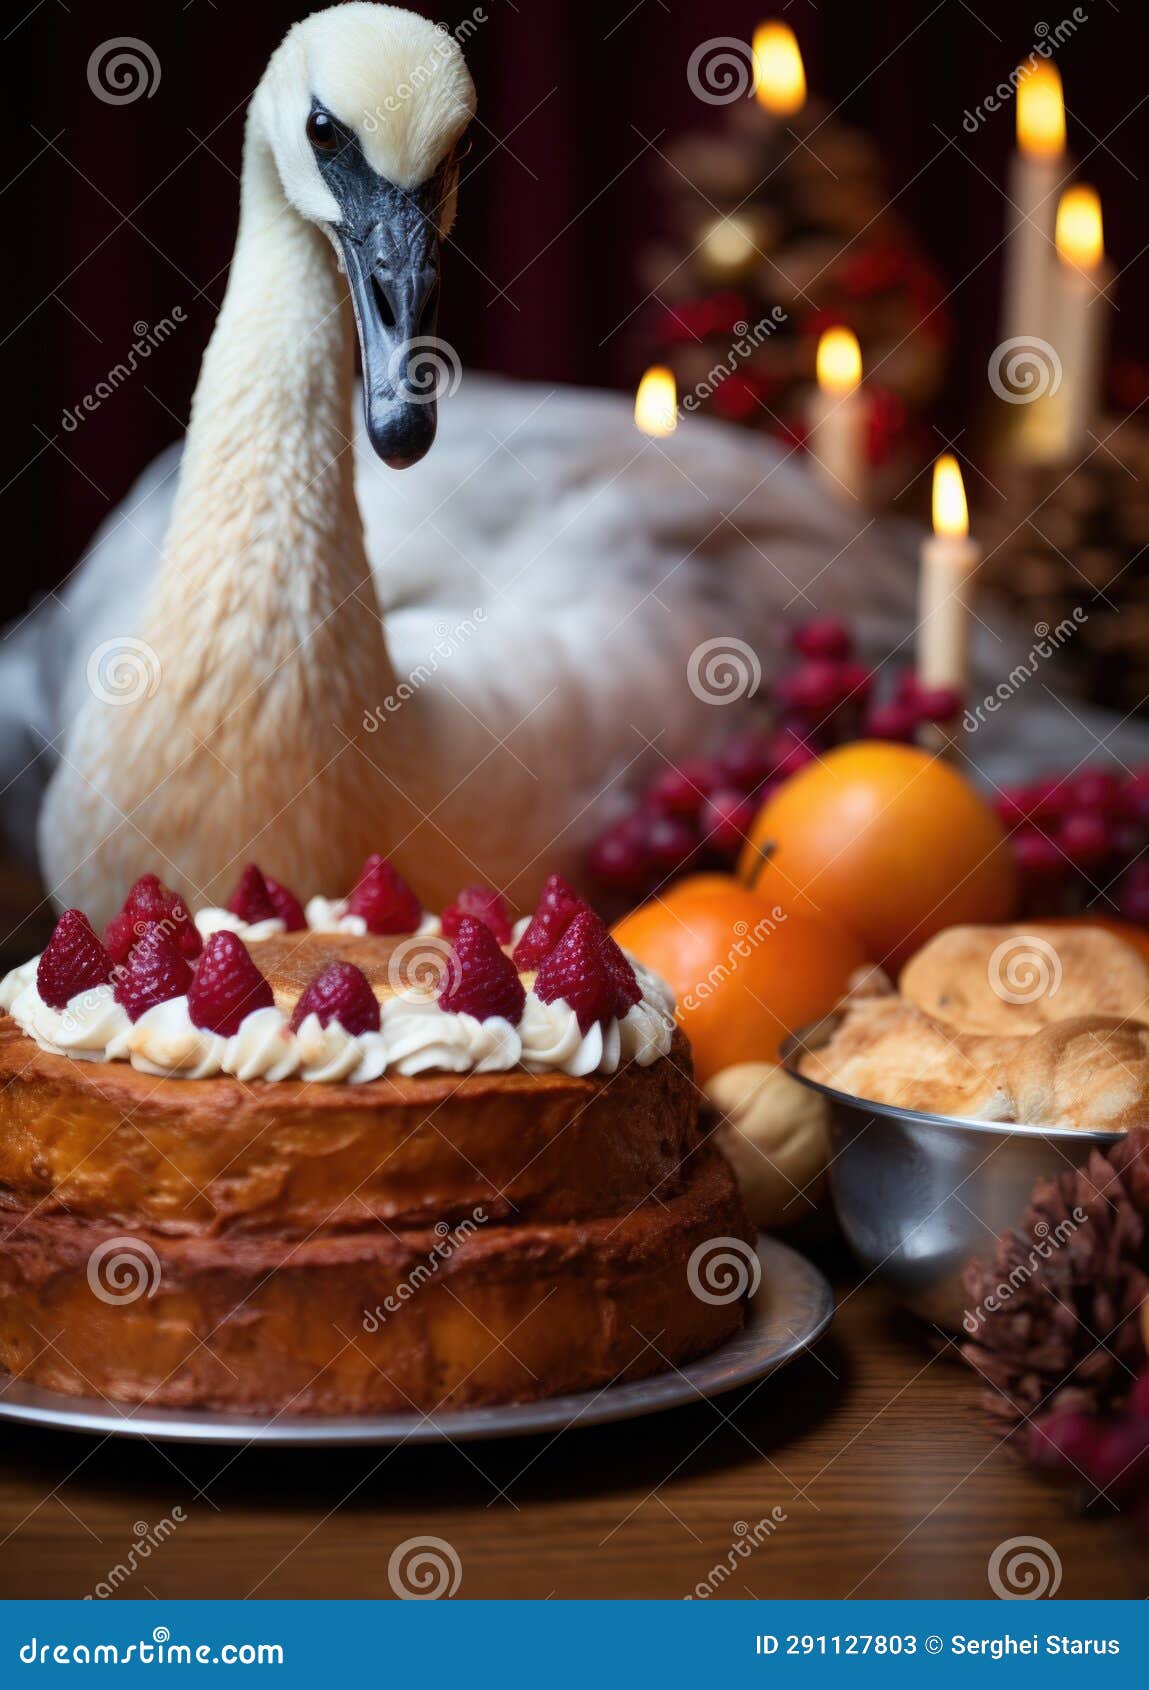 Swan Cake | Perhaps A Cake